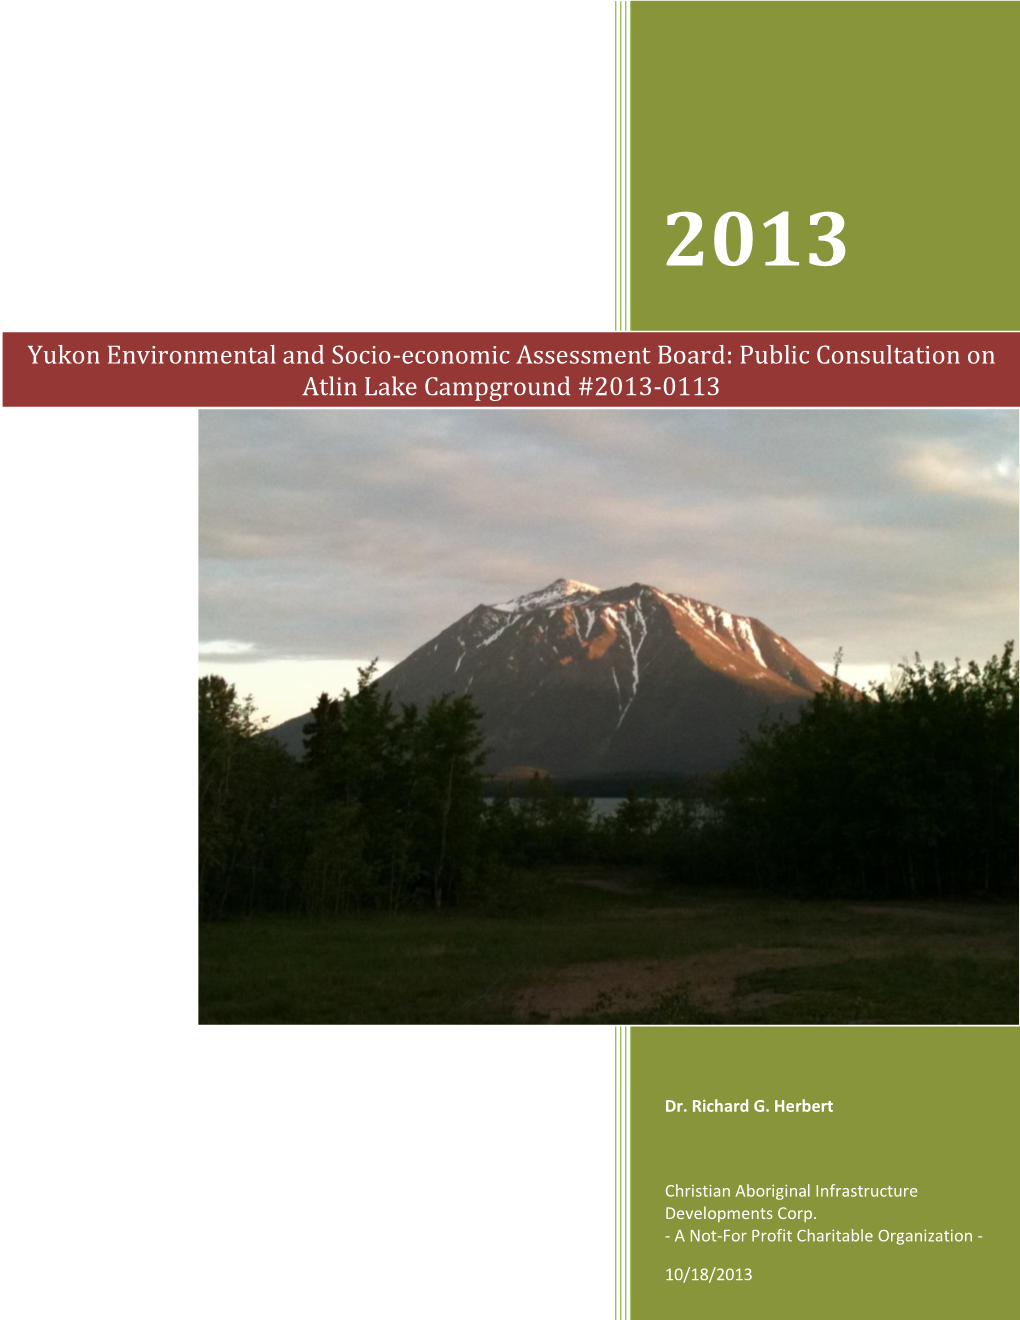 Yukon Environmental and Socio-Economic Assessment Board: Public Consultation on Atlin Lake Campground #2013-0113